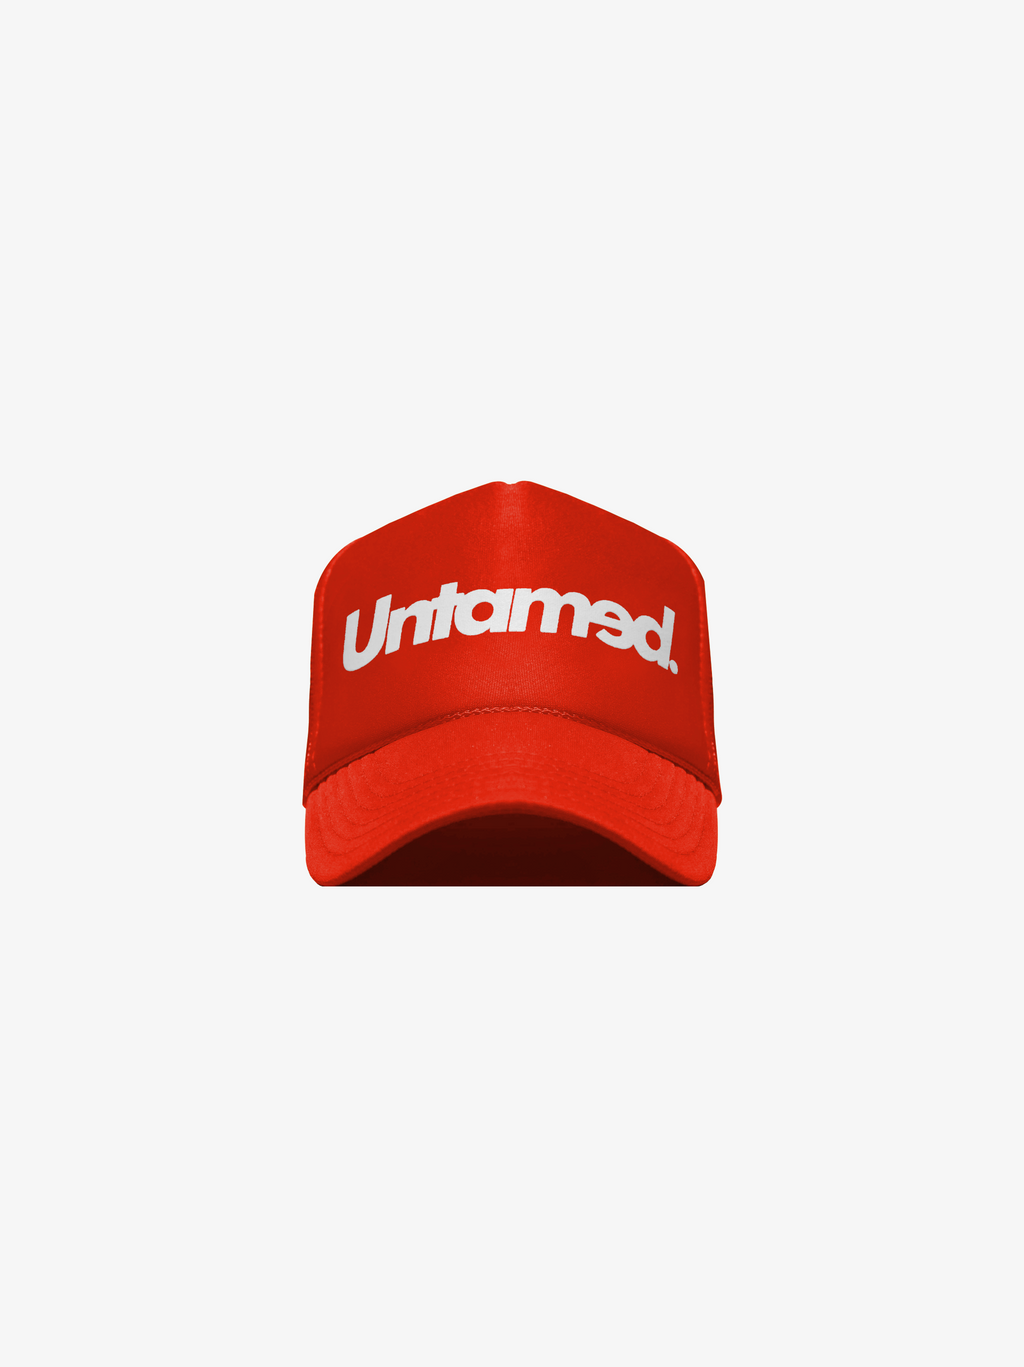 Untamed Classic Red Trucker Hat